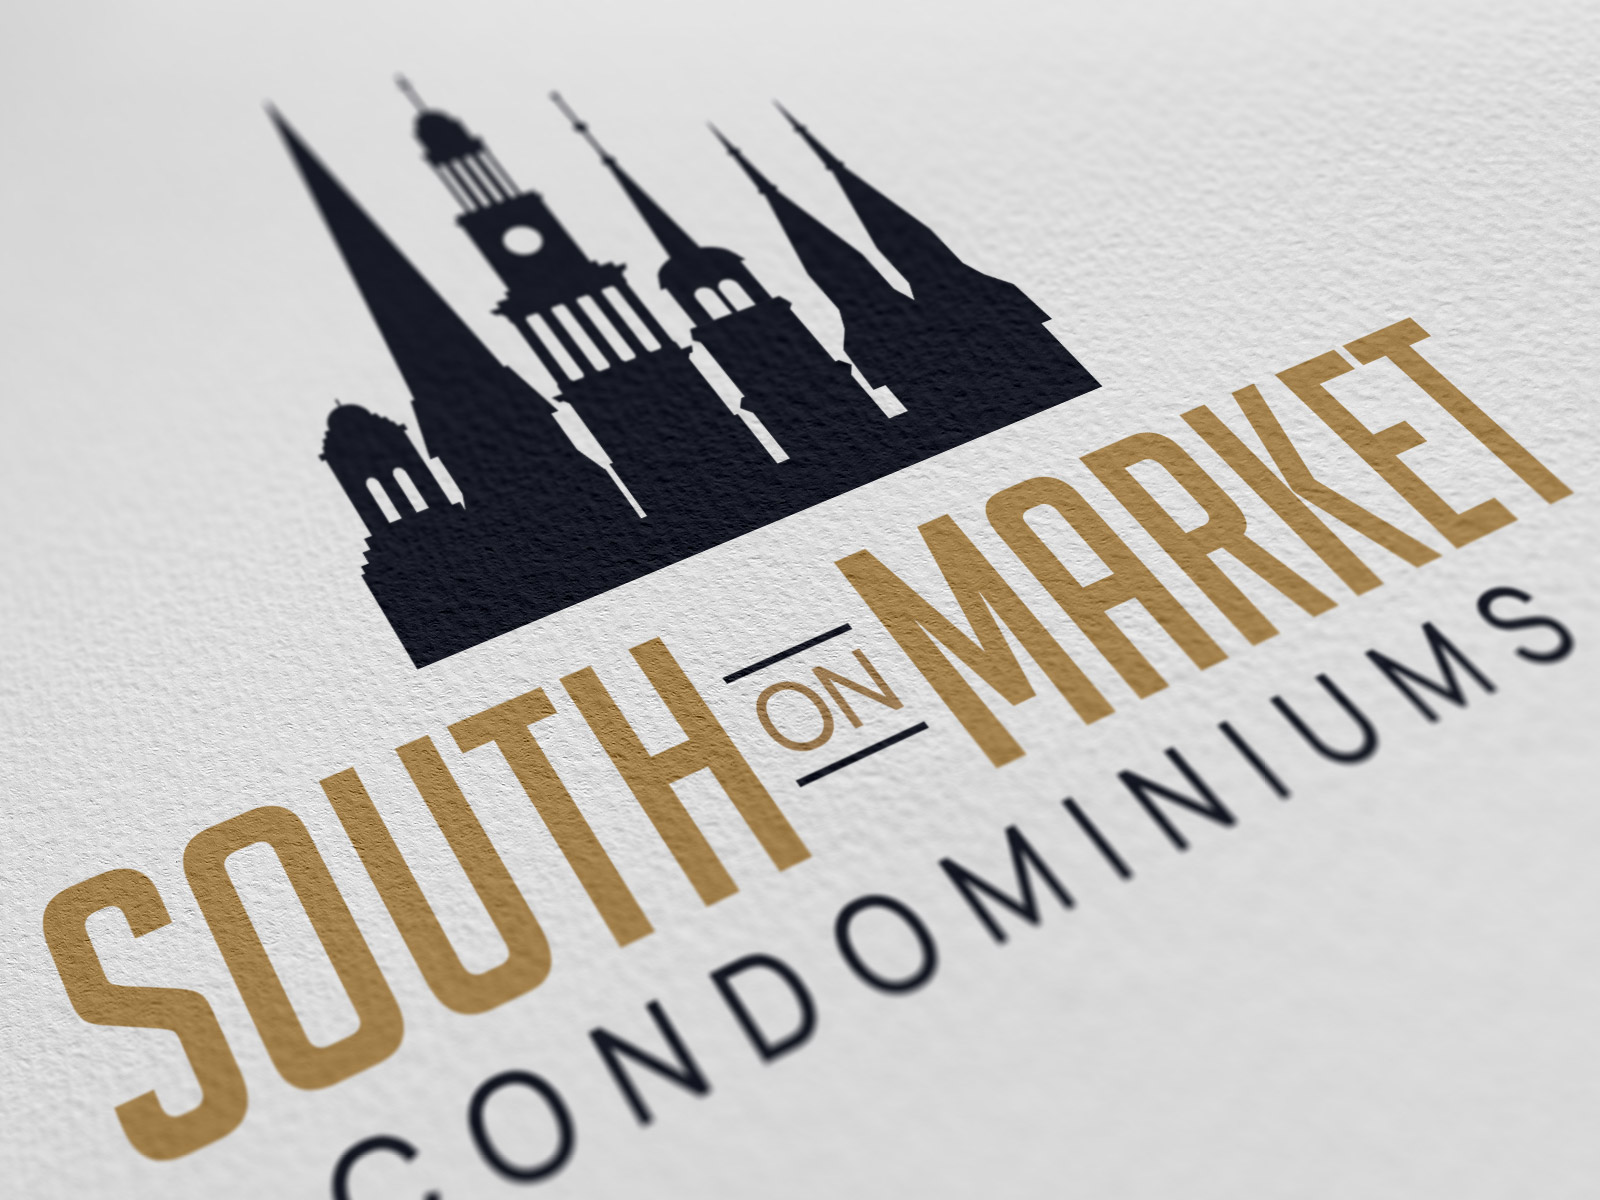 South on Market Condominiums Logo